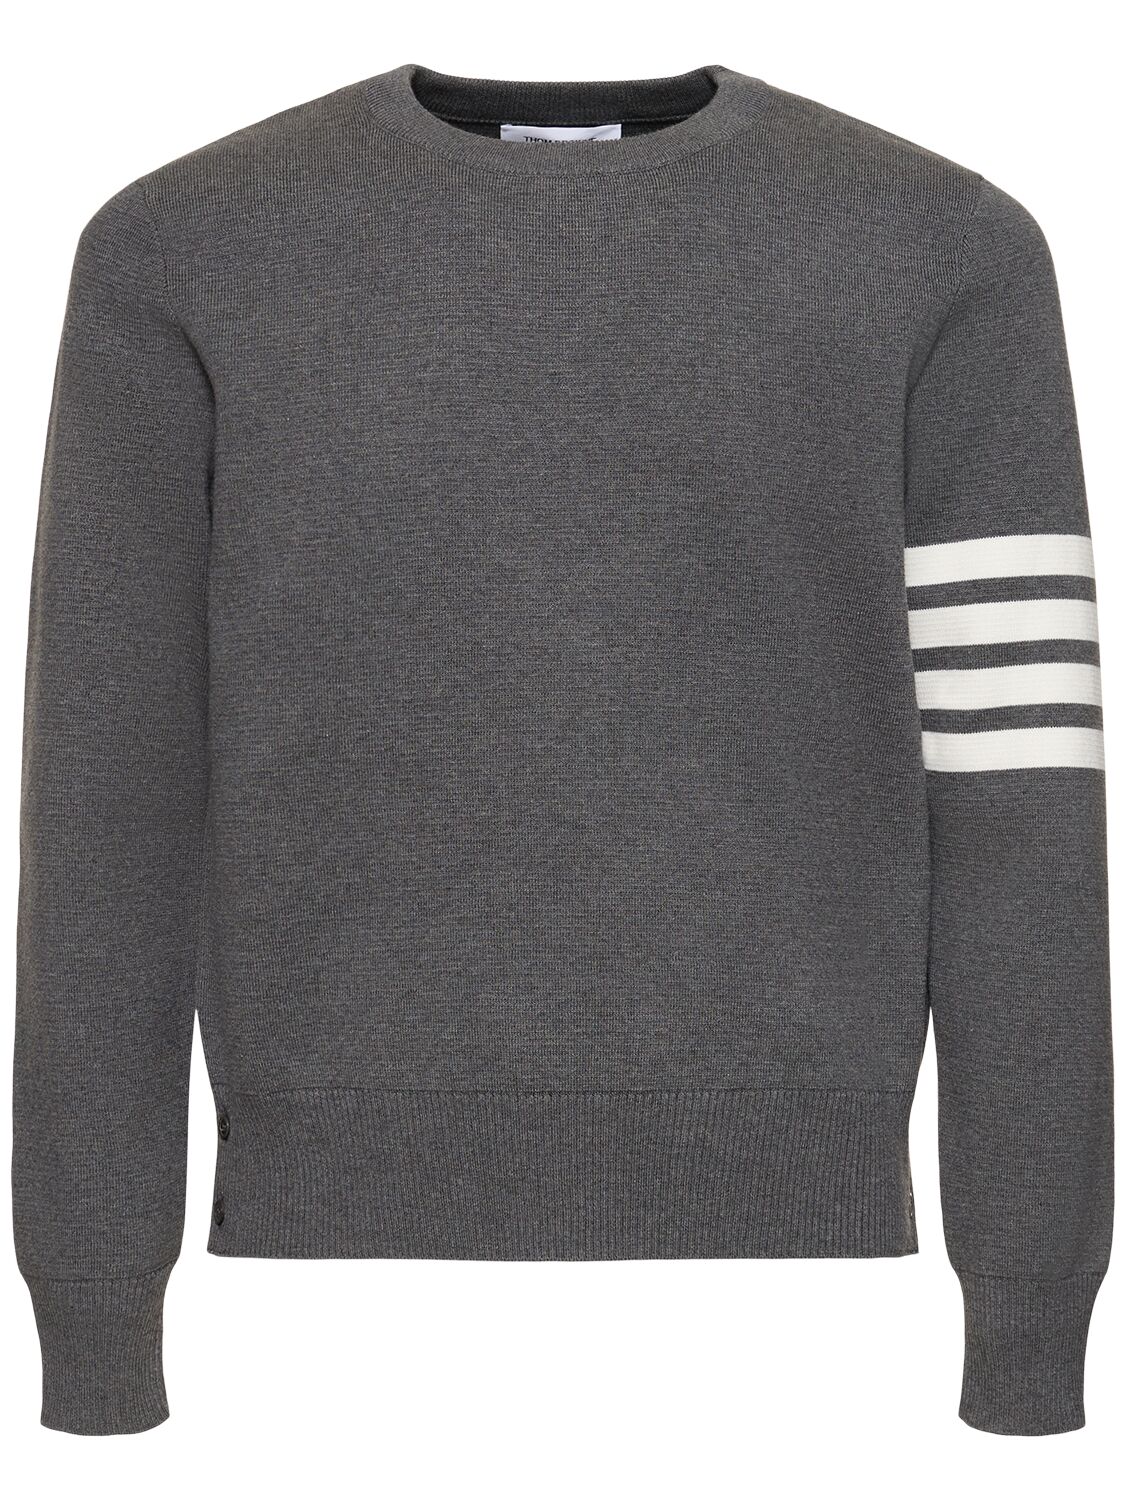 Milano Stitch Cotton Crewneck Sweater